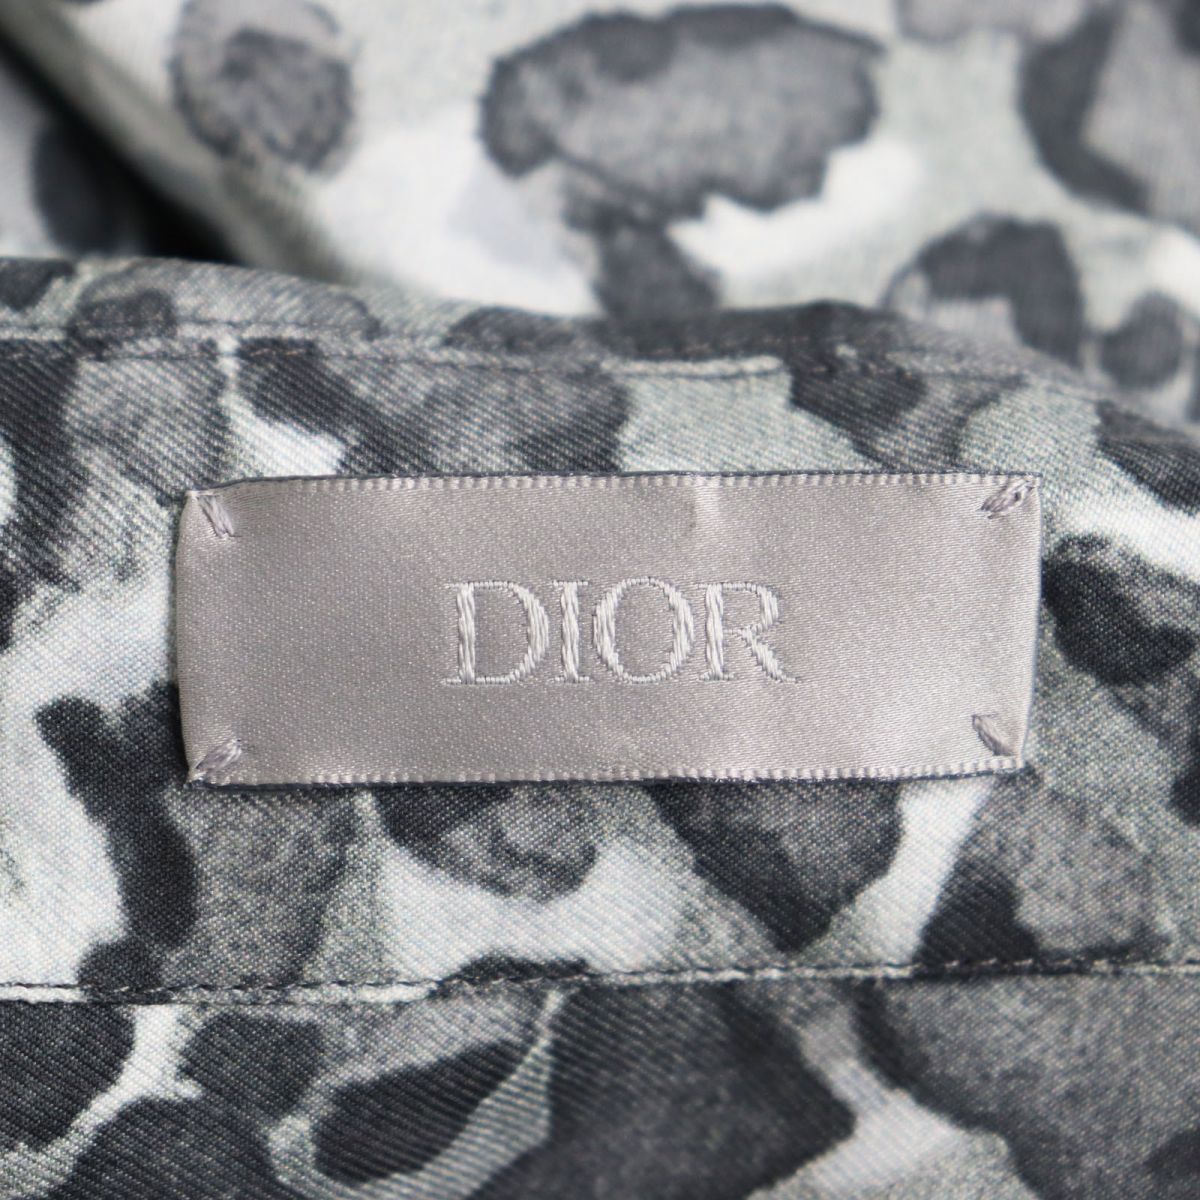  ultimate beautiful *DIOR Dior Homme 933C515A4579 silk 100% Leopard pattern / Logo print open color shirt / pyjamas shirt grey 39 made in Italy regular 